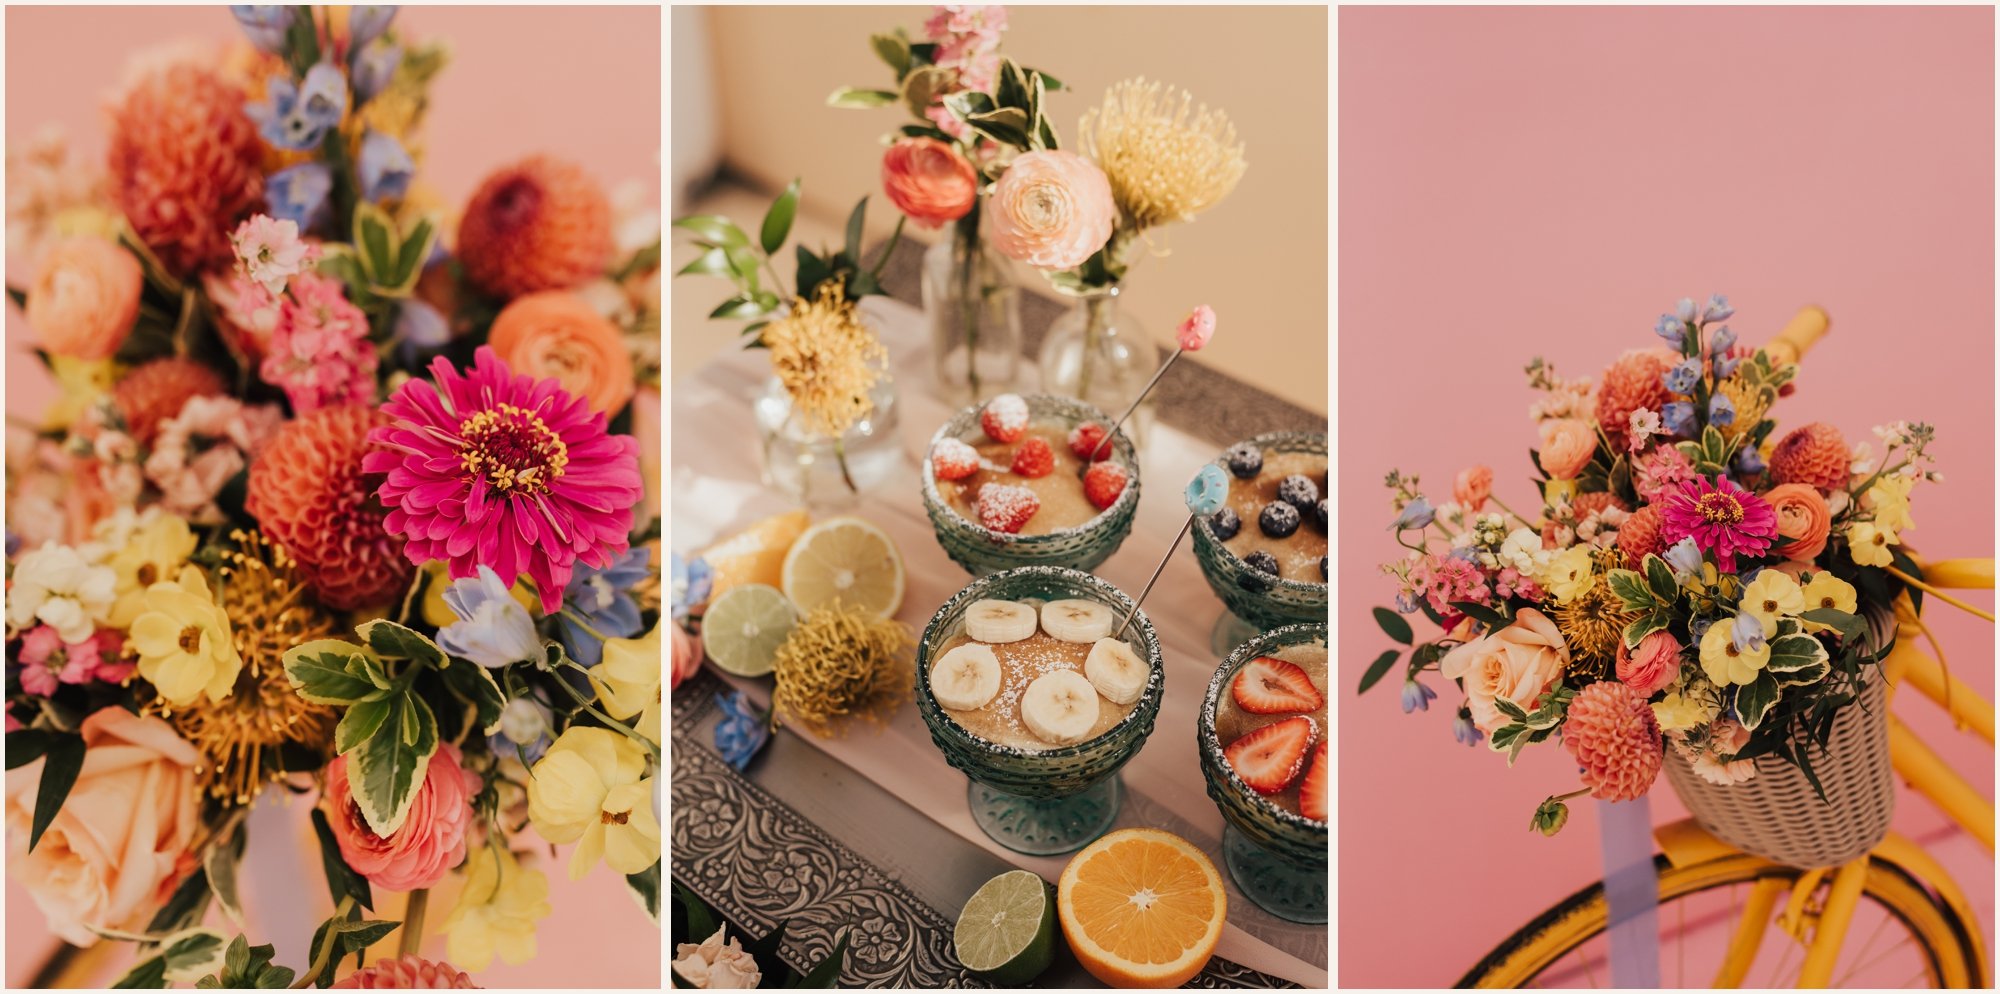 Colorful Wedding Inspiration with Large Bridal Bouquet | Lauren Parr Photography | Austin Based Wedding Photographer